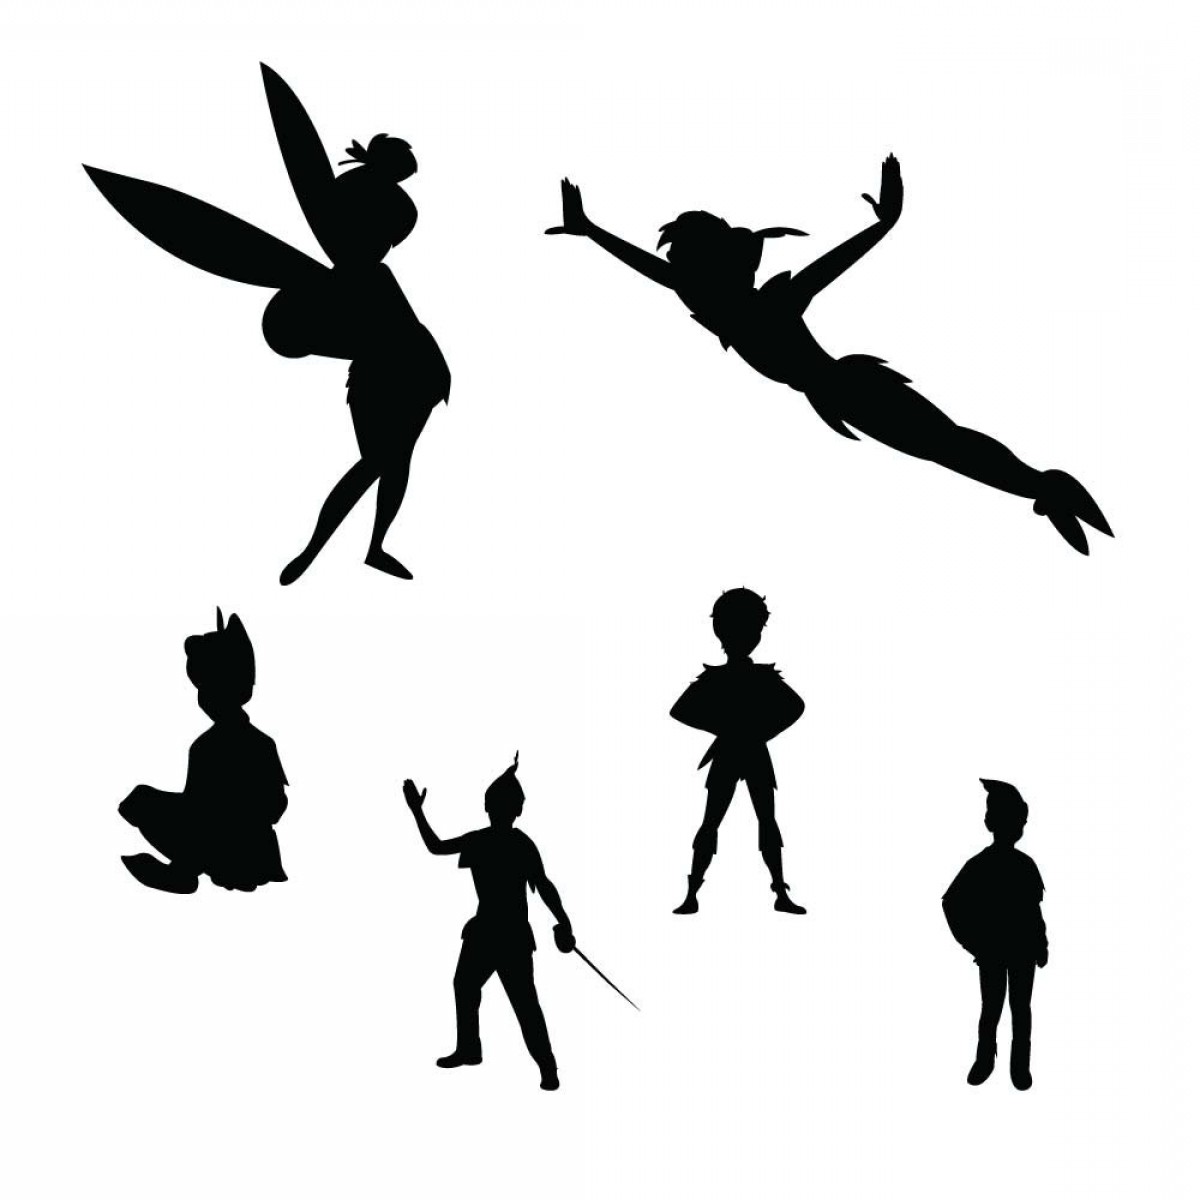 Peter Pan Silhouette Free SVG